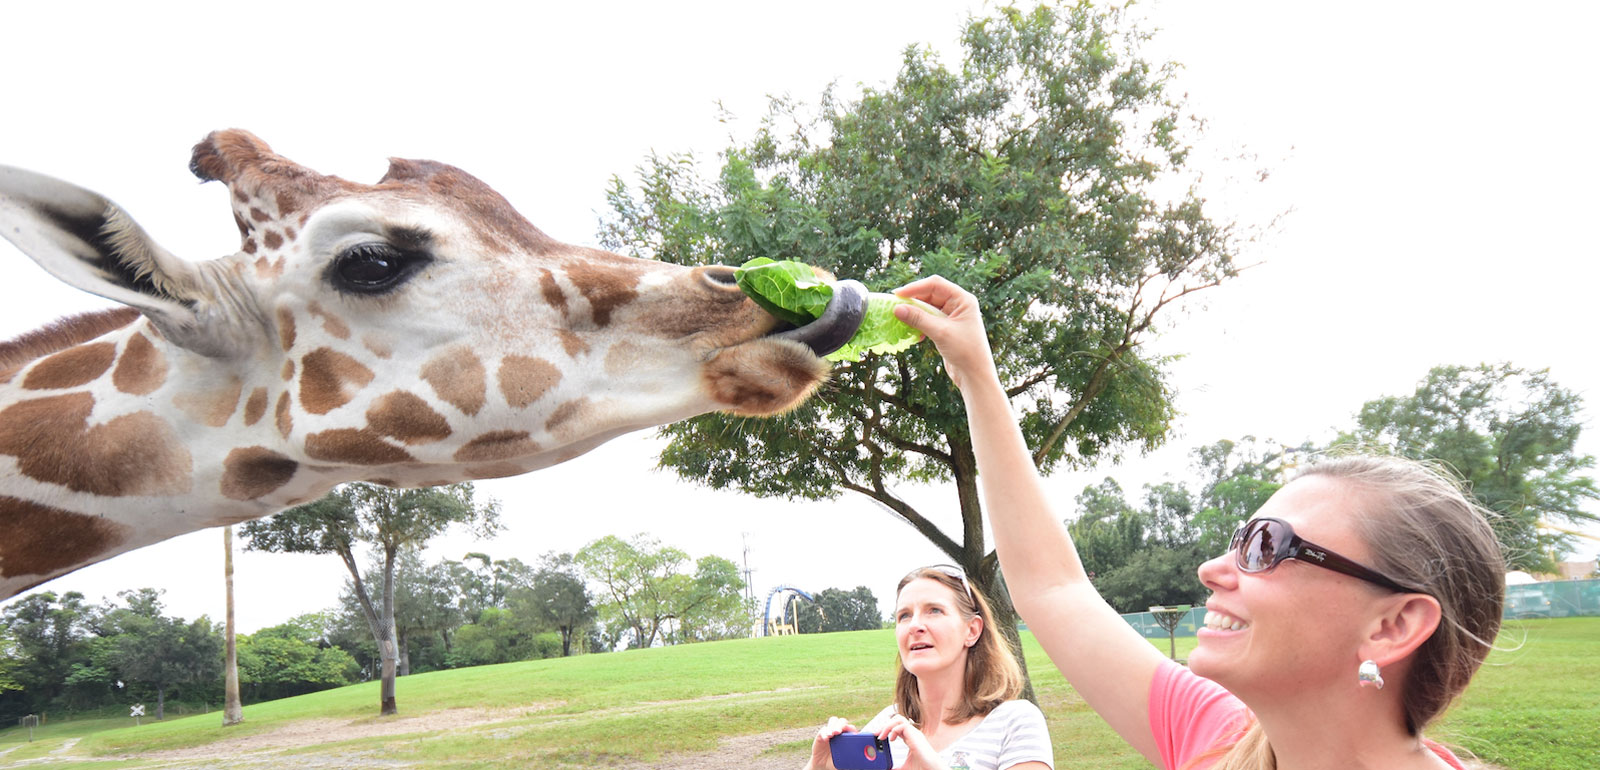 Girl feeding the giraffe